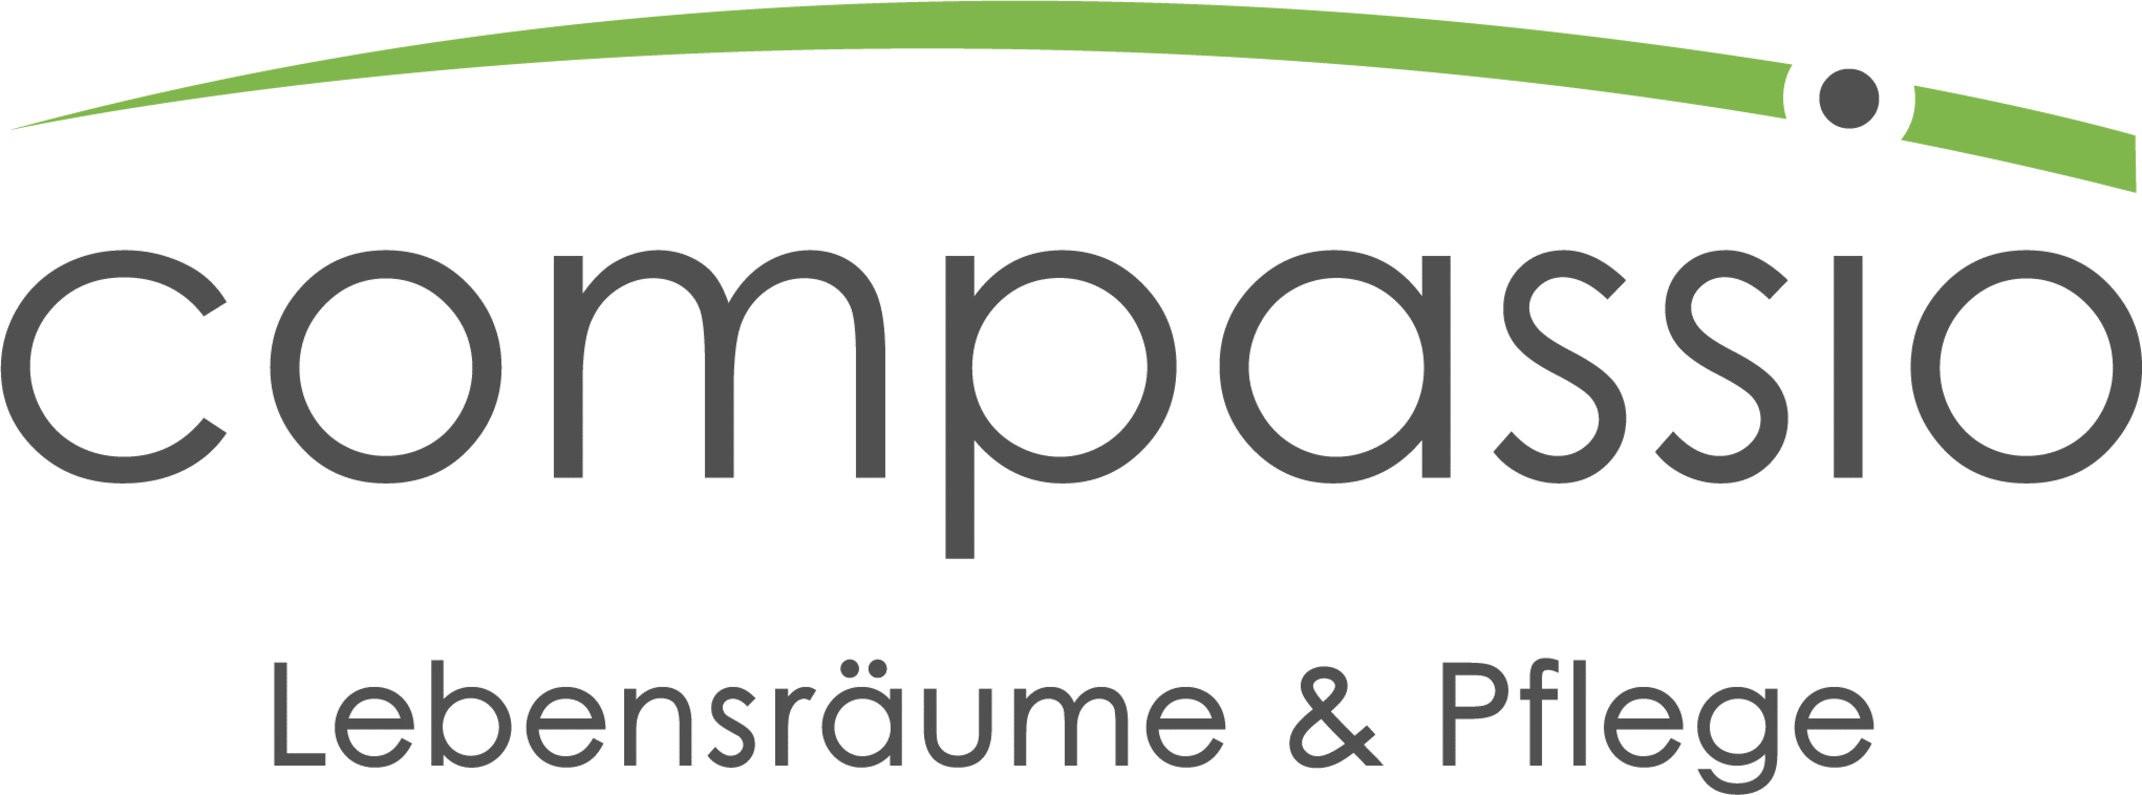 compassio Westfalen GmbH & Co. KG